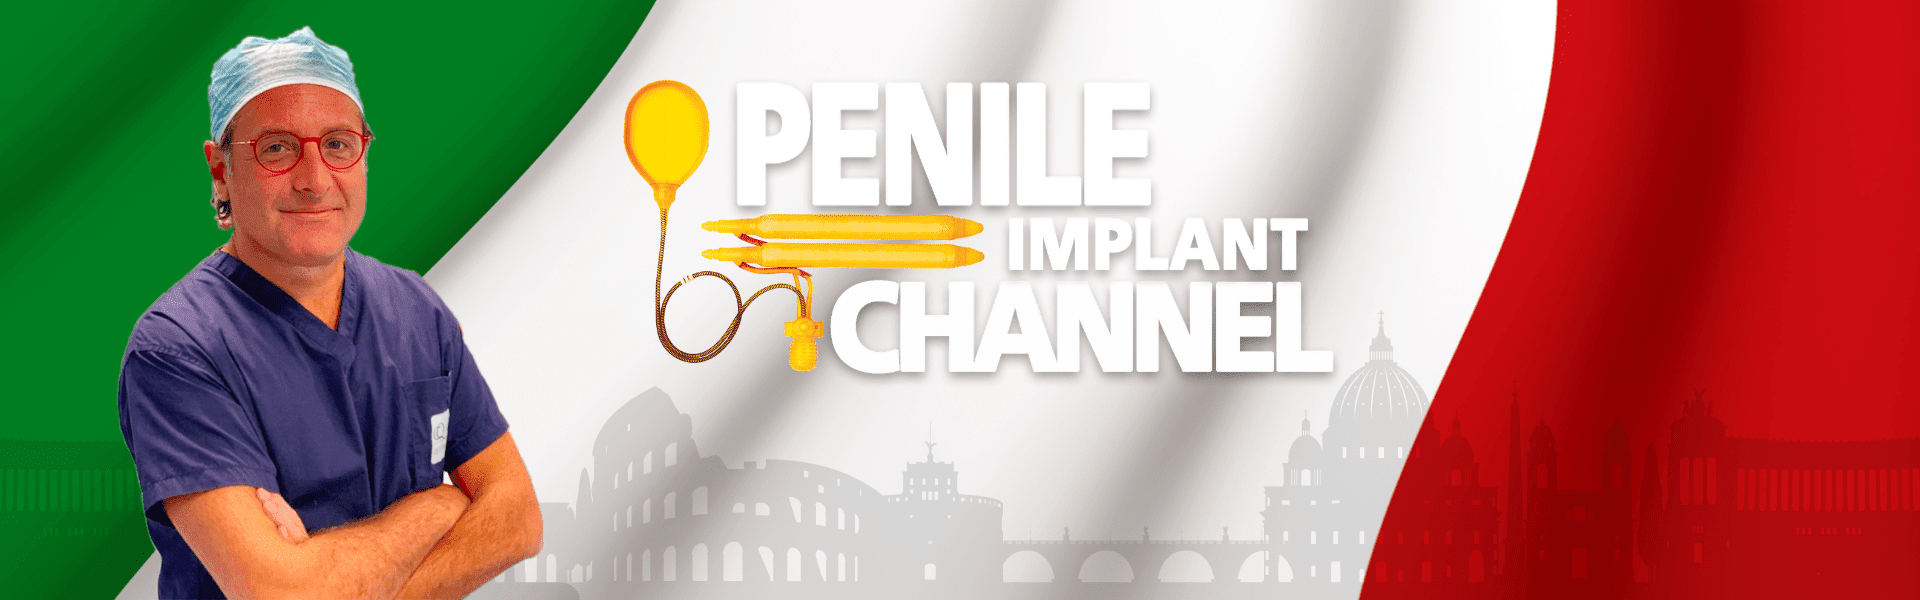 logo penile implant channel